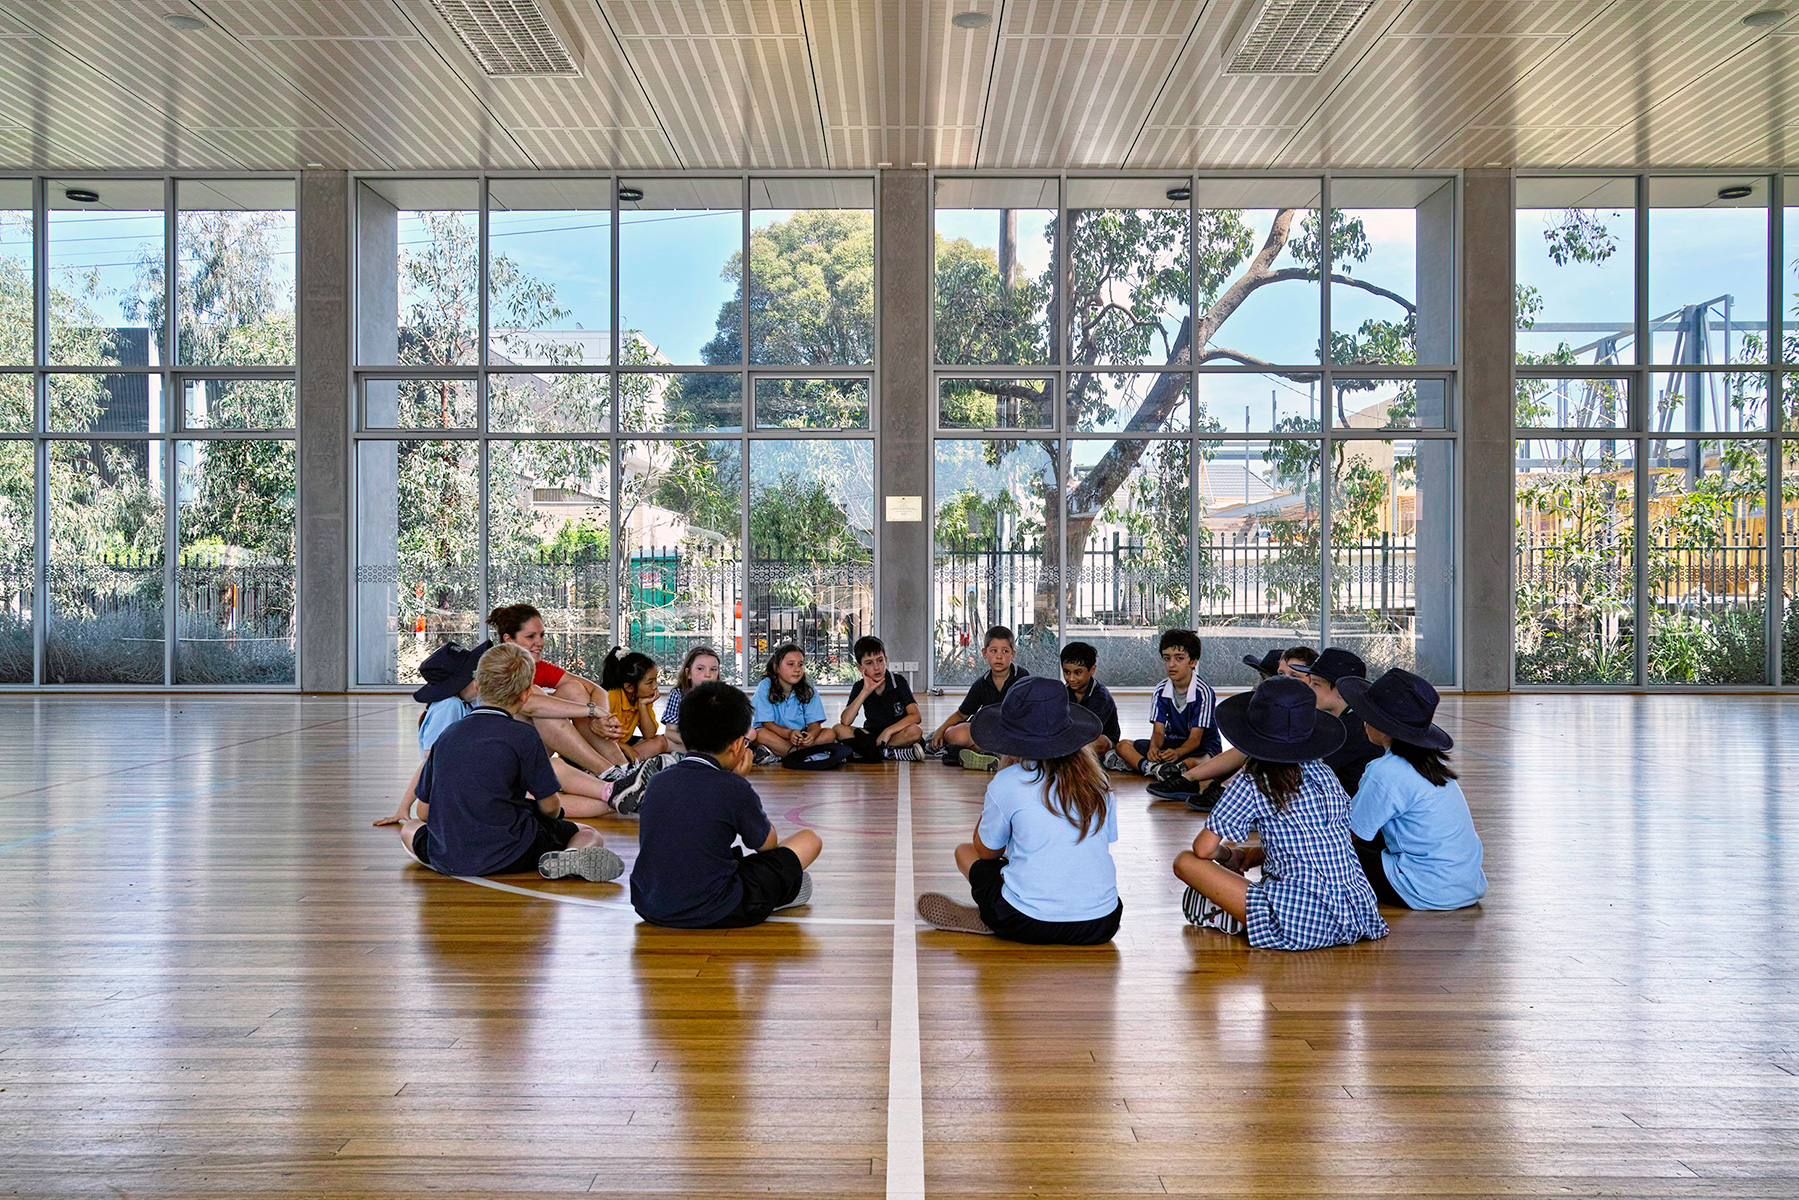 The ‘NATURE’ of new school design - Kew Primary School